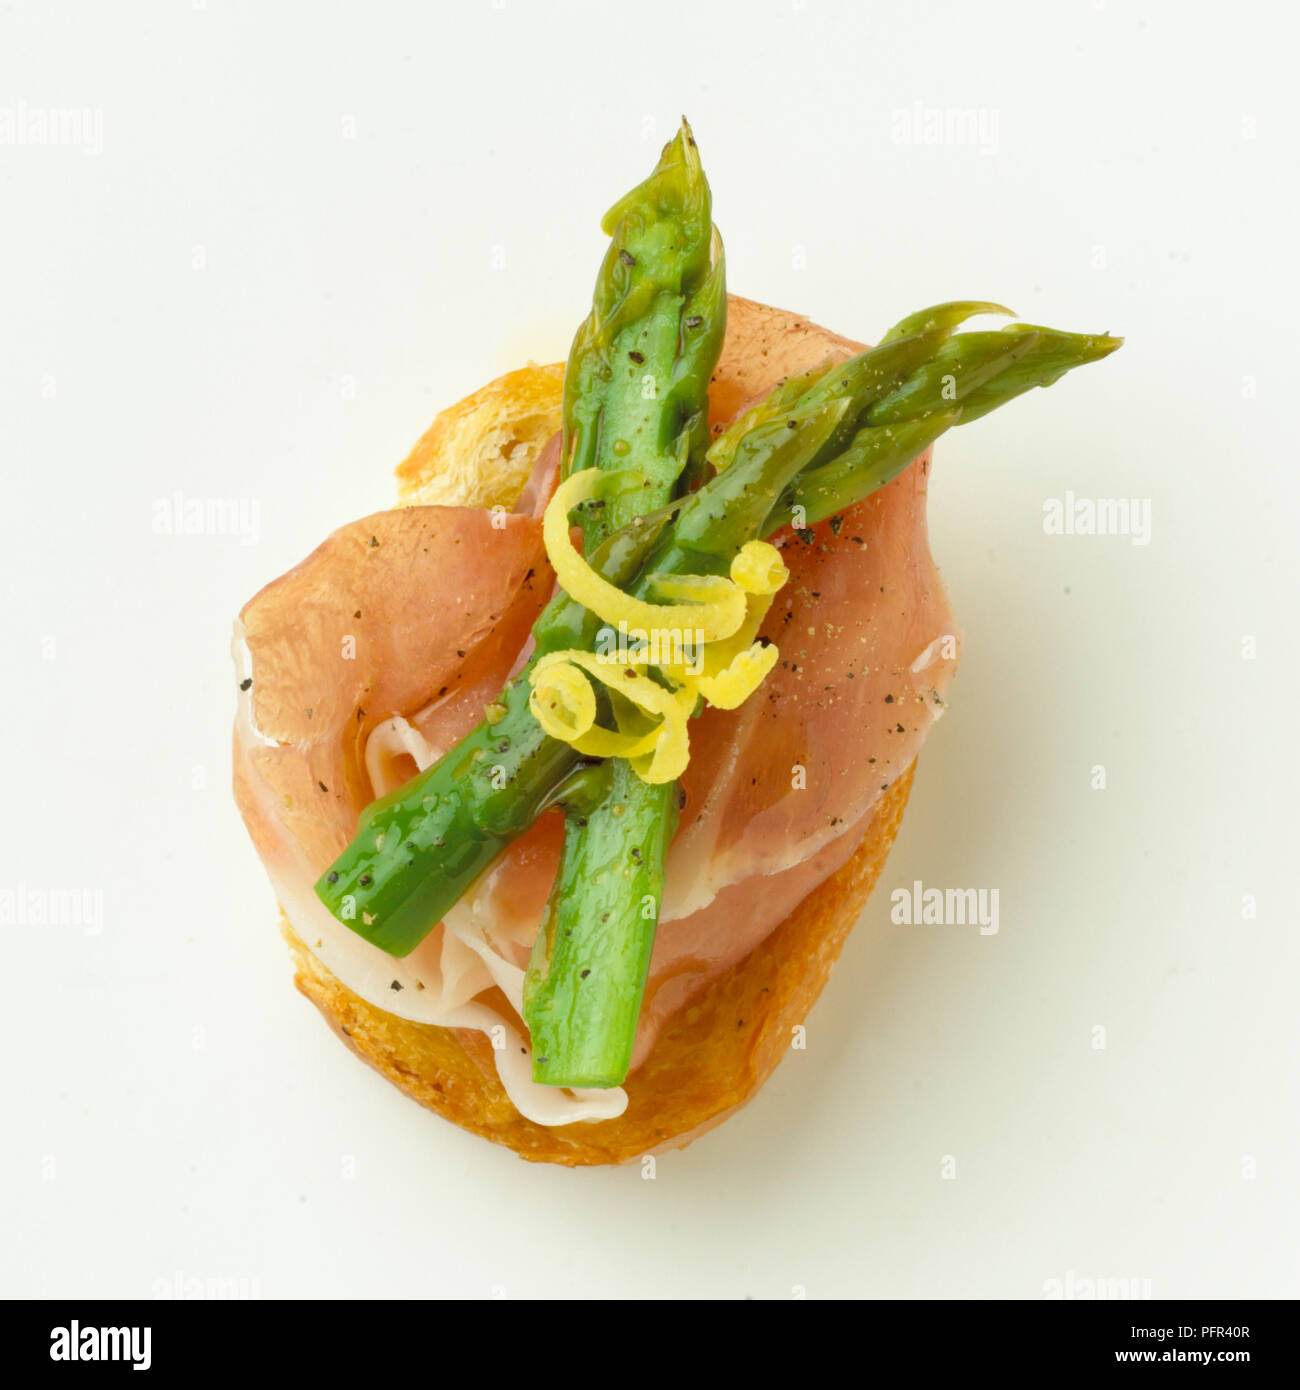 Parma ham and asparagus crostini Stock Photo